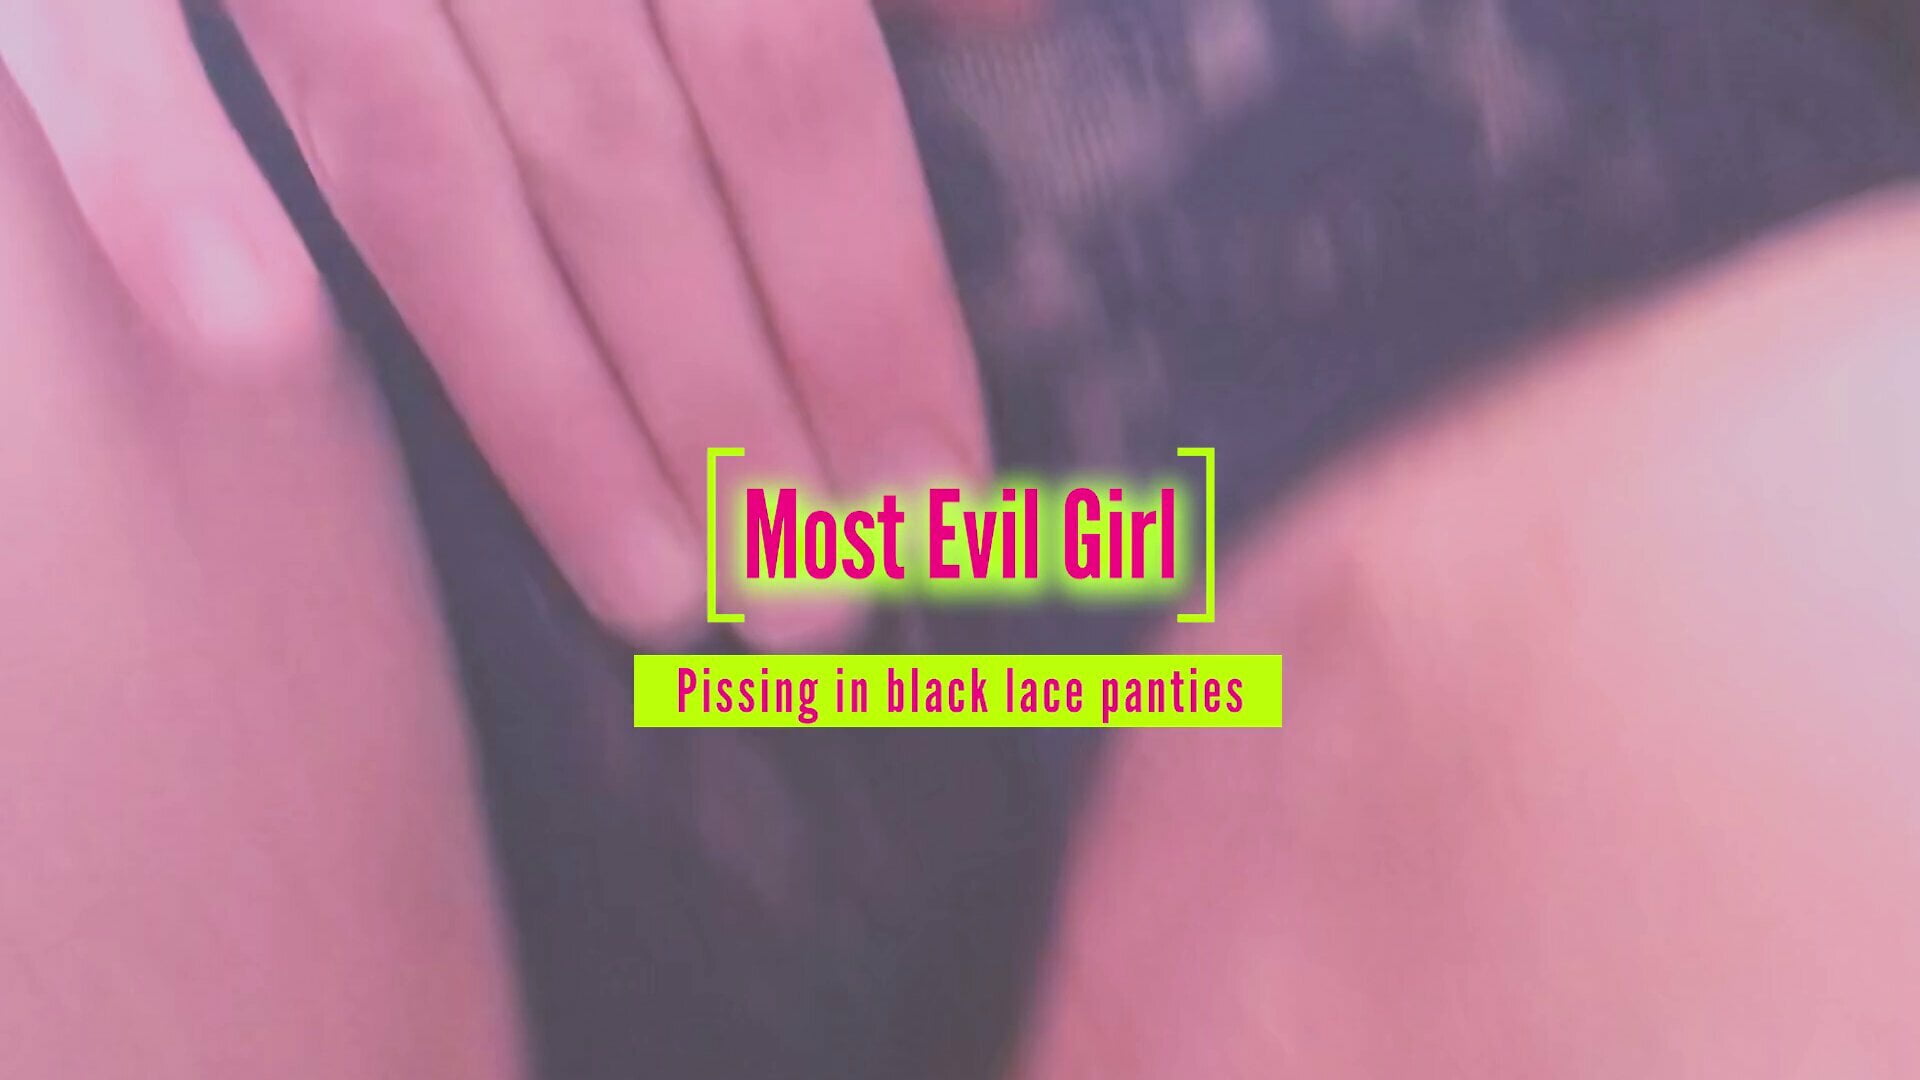 Pissing in black lace panties